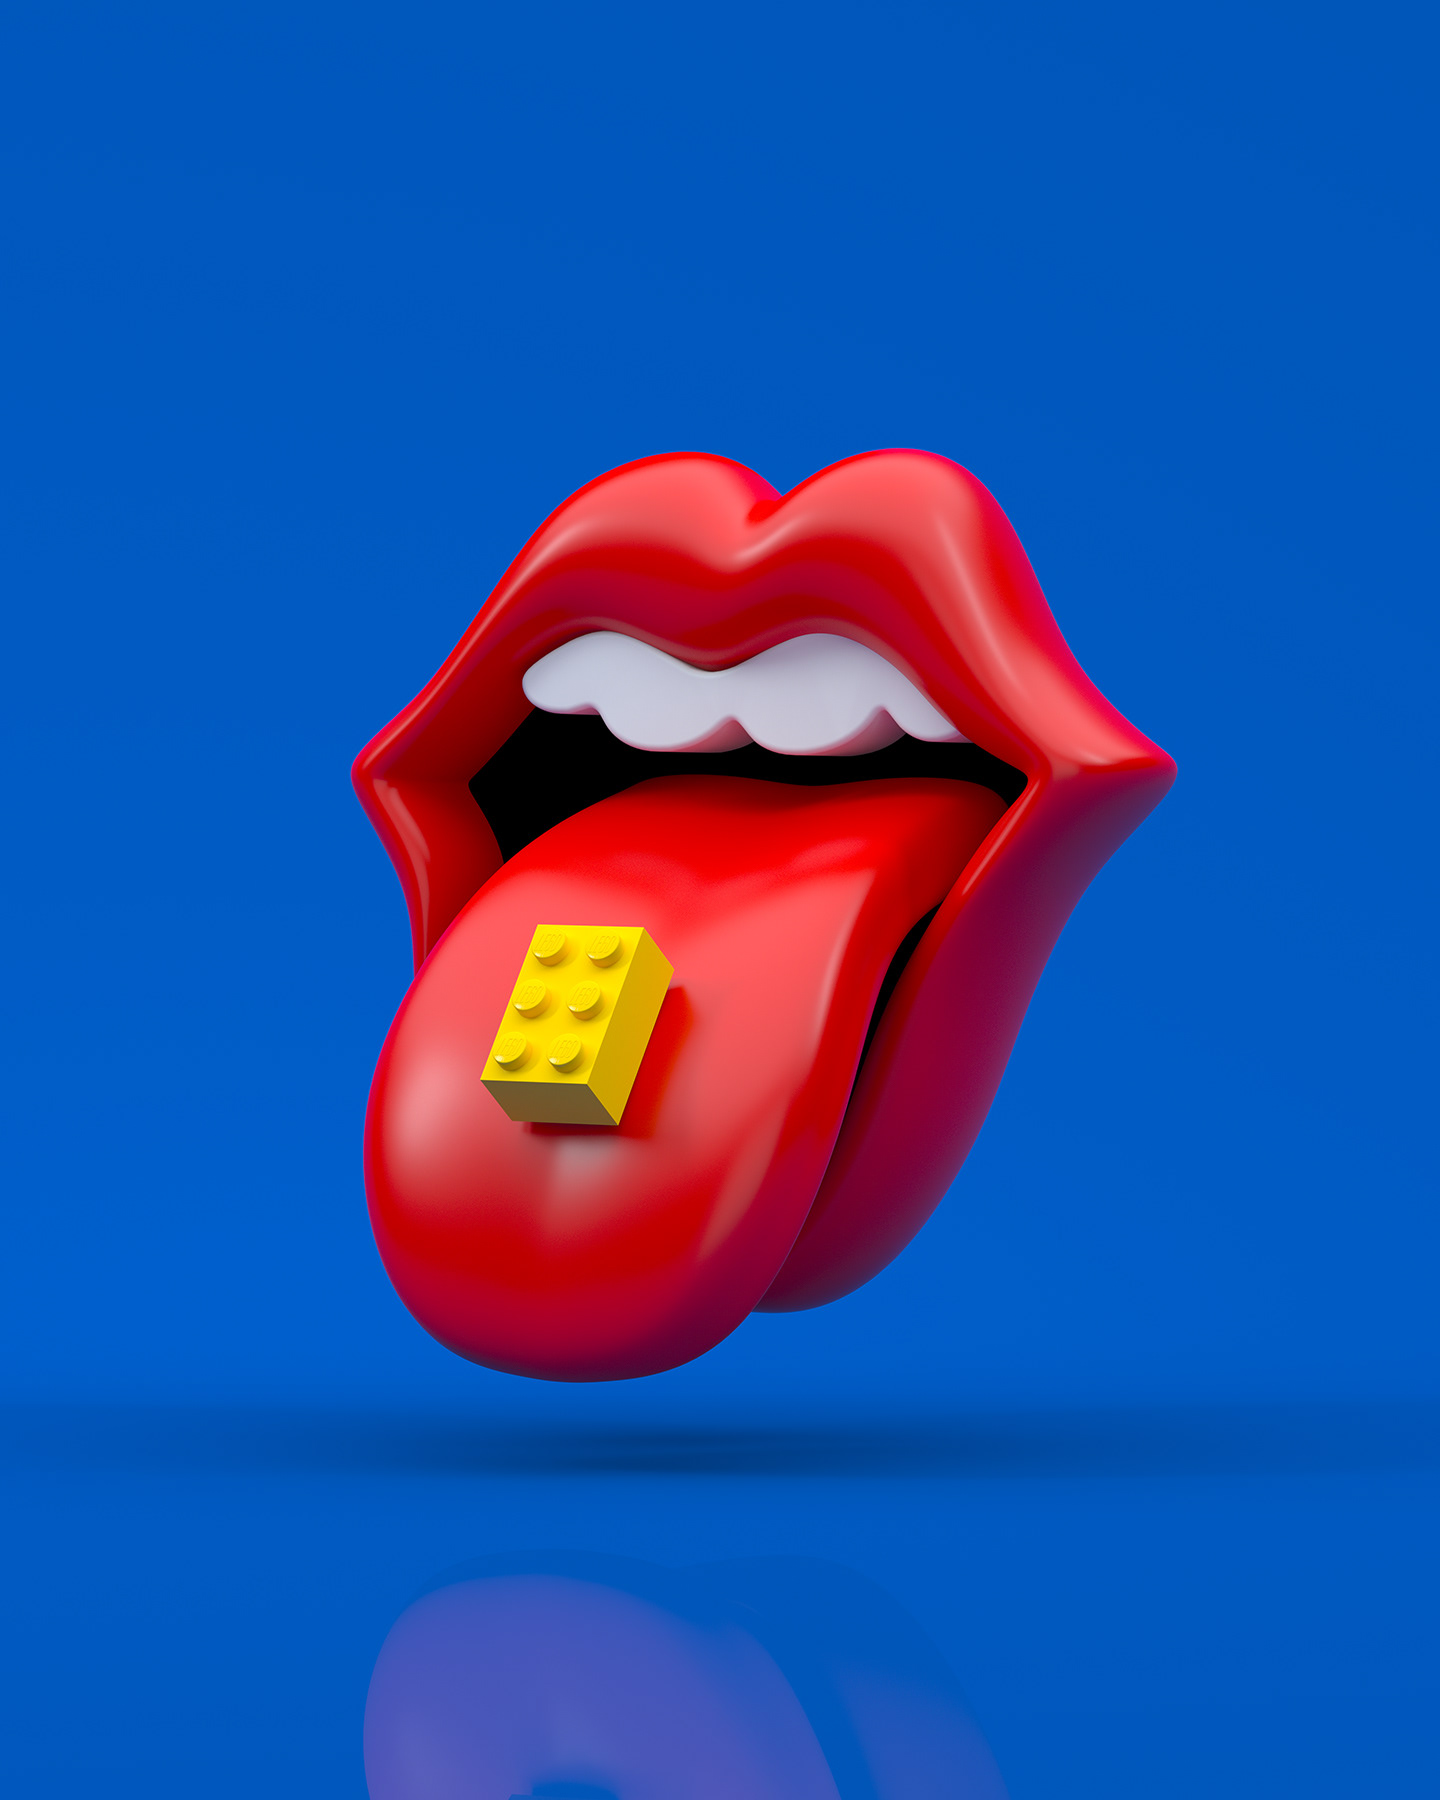 General 1440x1800 digital art minimalism blue background LEGO portrait display bricks toys humor tongues tongue out Rolling Stones logo